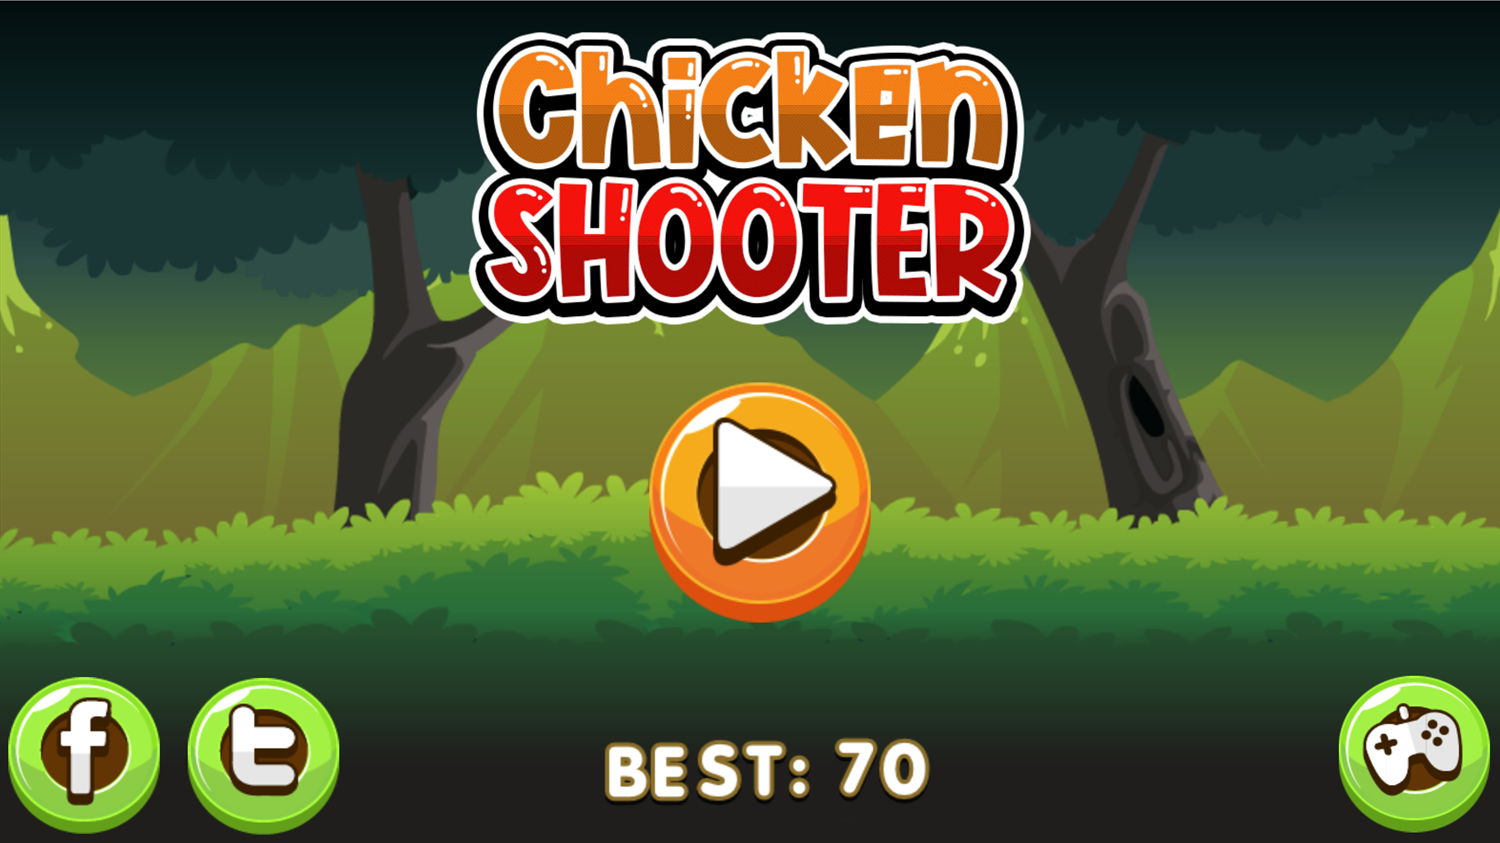 Chicken Shooter Game Welcome Screen Screenshot.